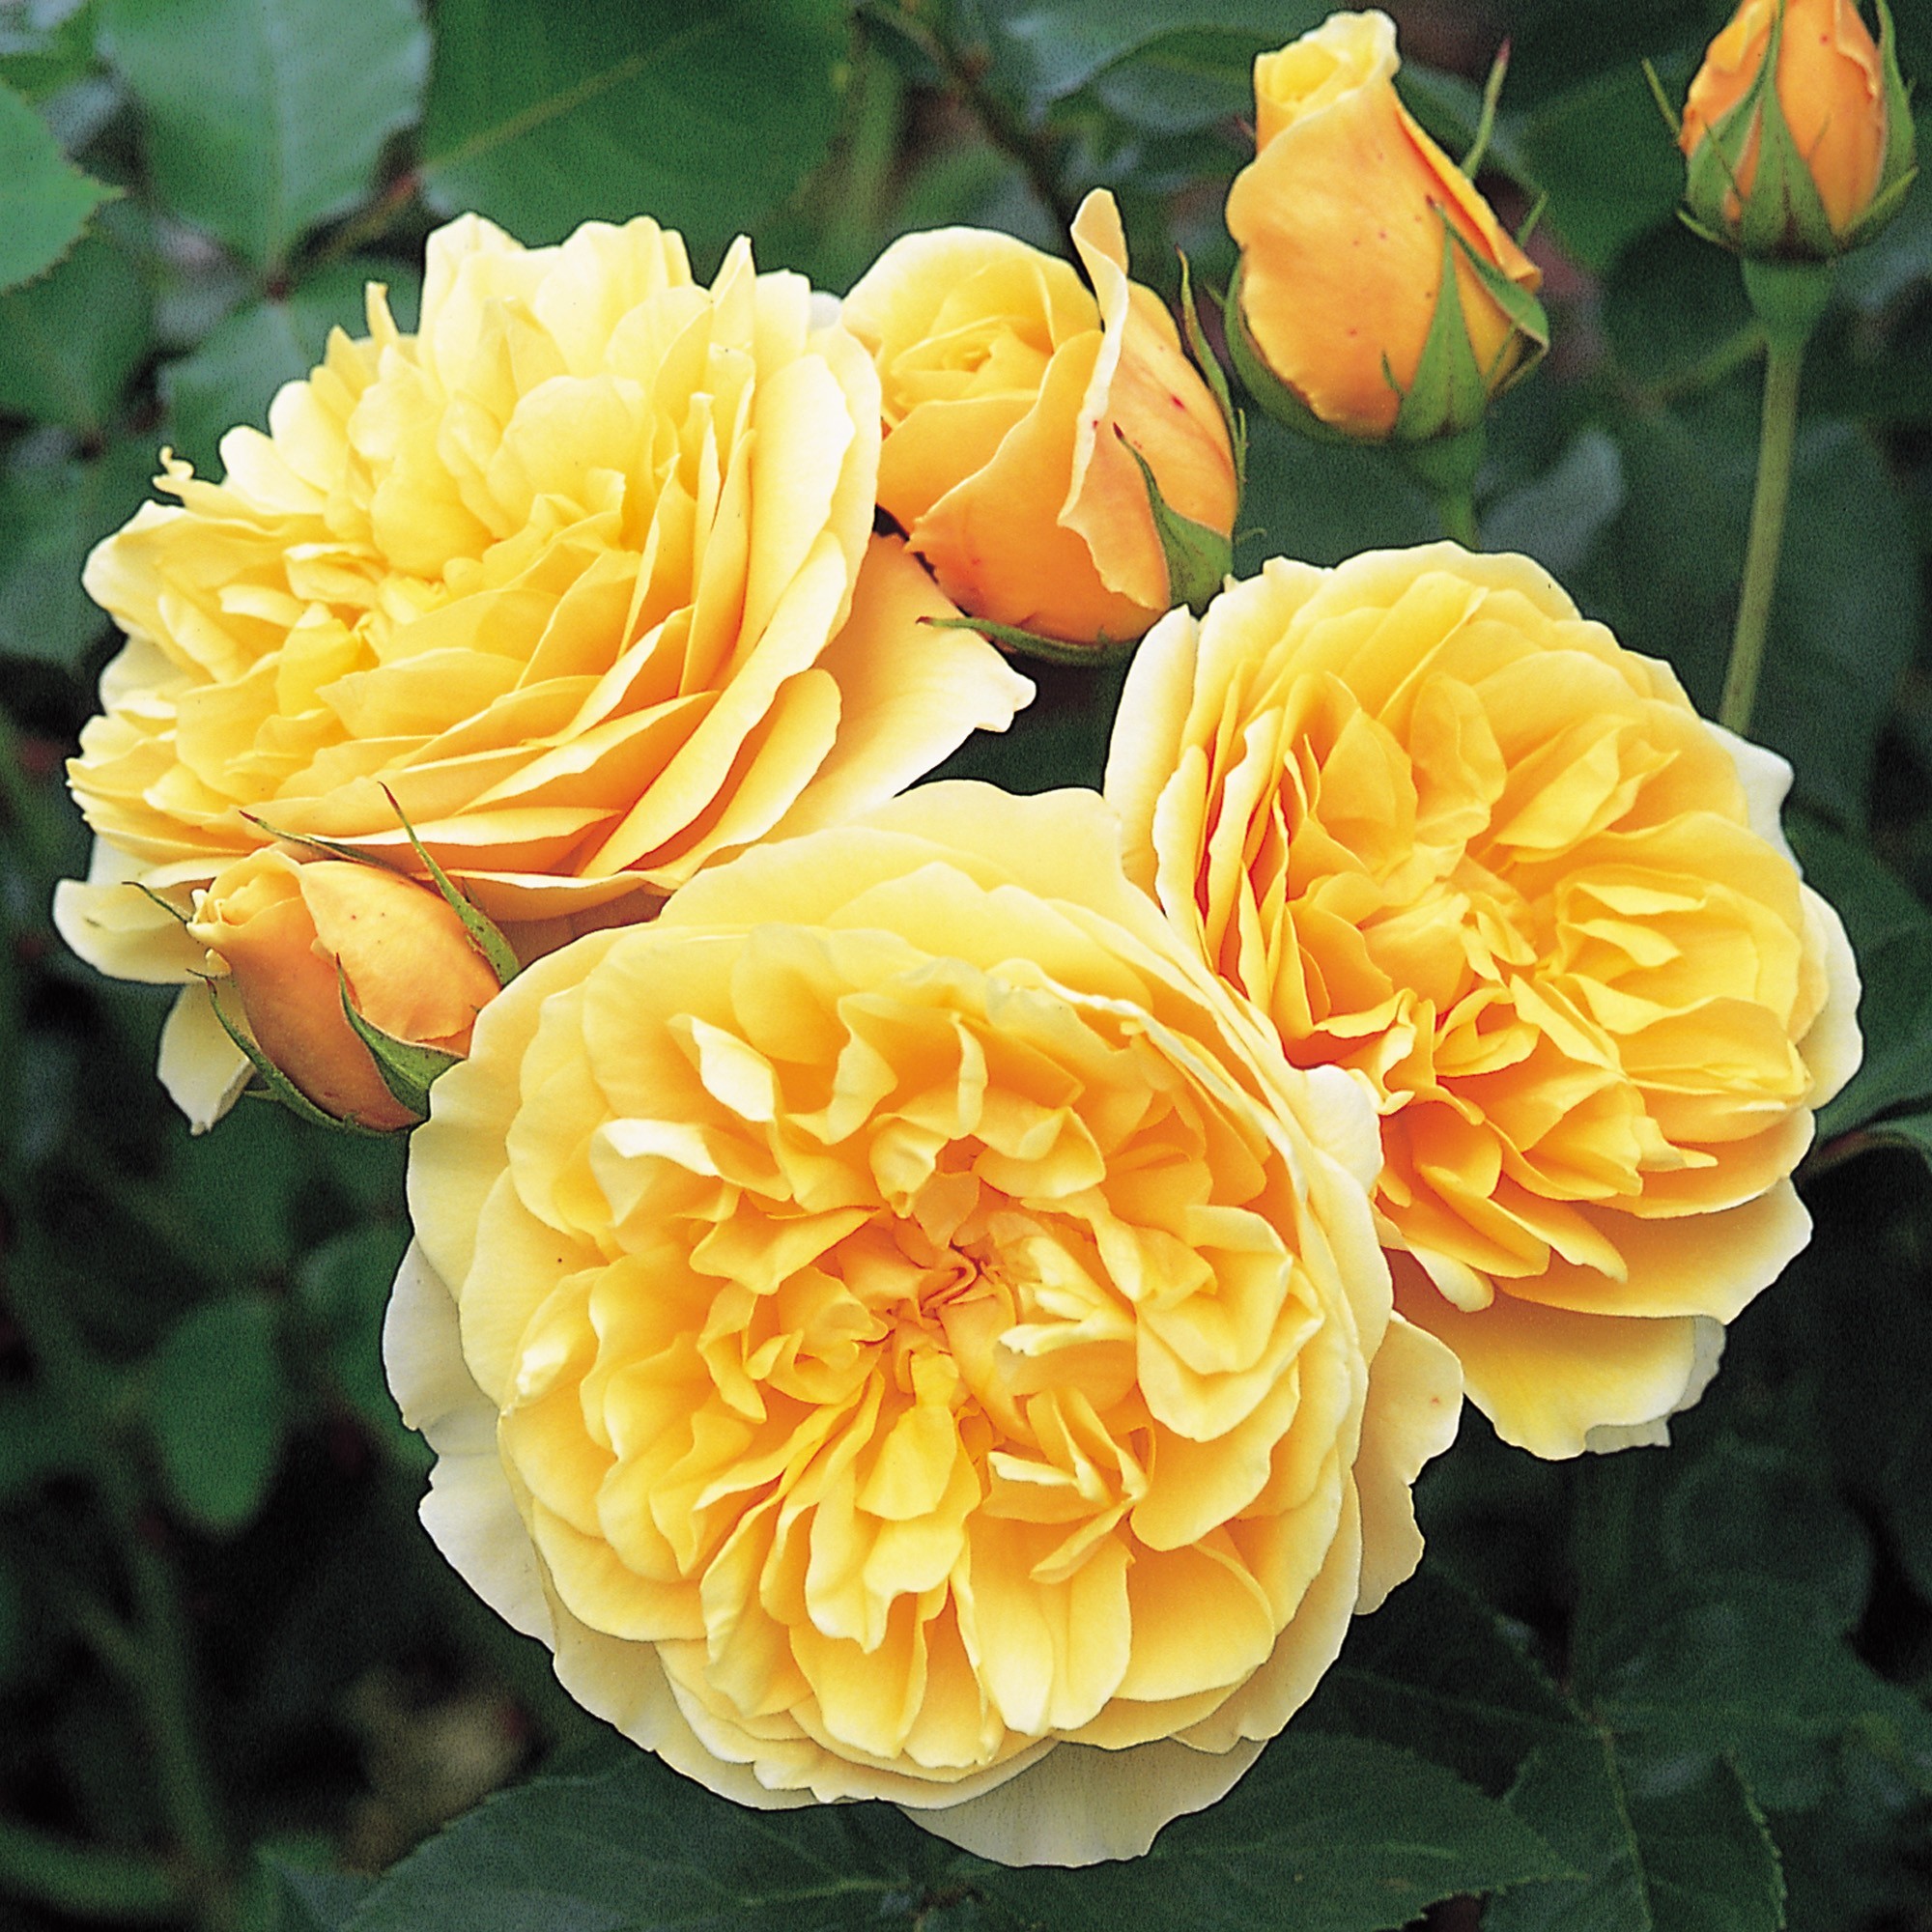 Graham Thomas 1 2 - Top 15 Beautiful Yellow Flowers In The World